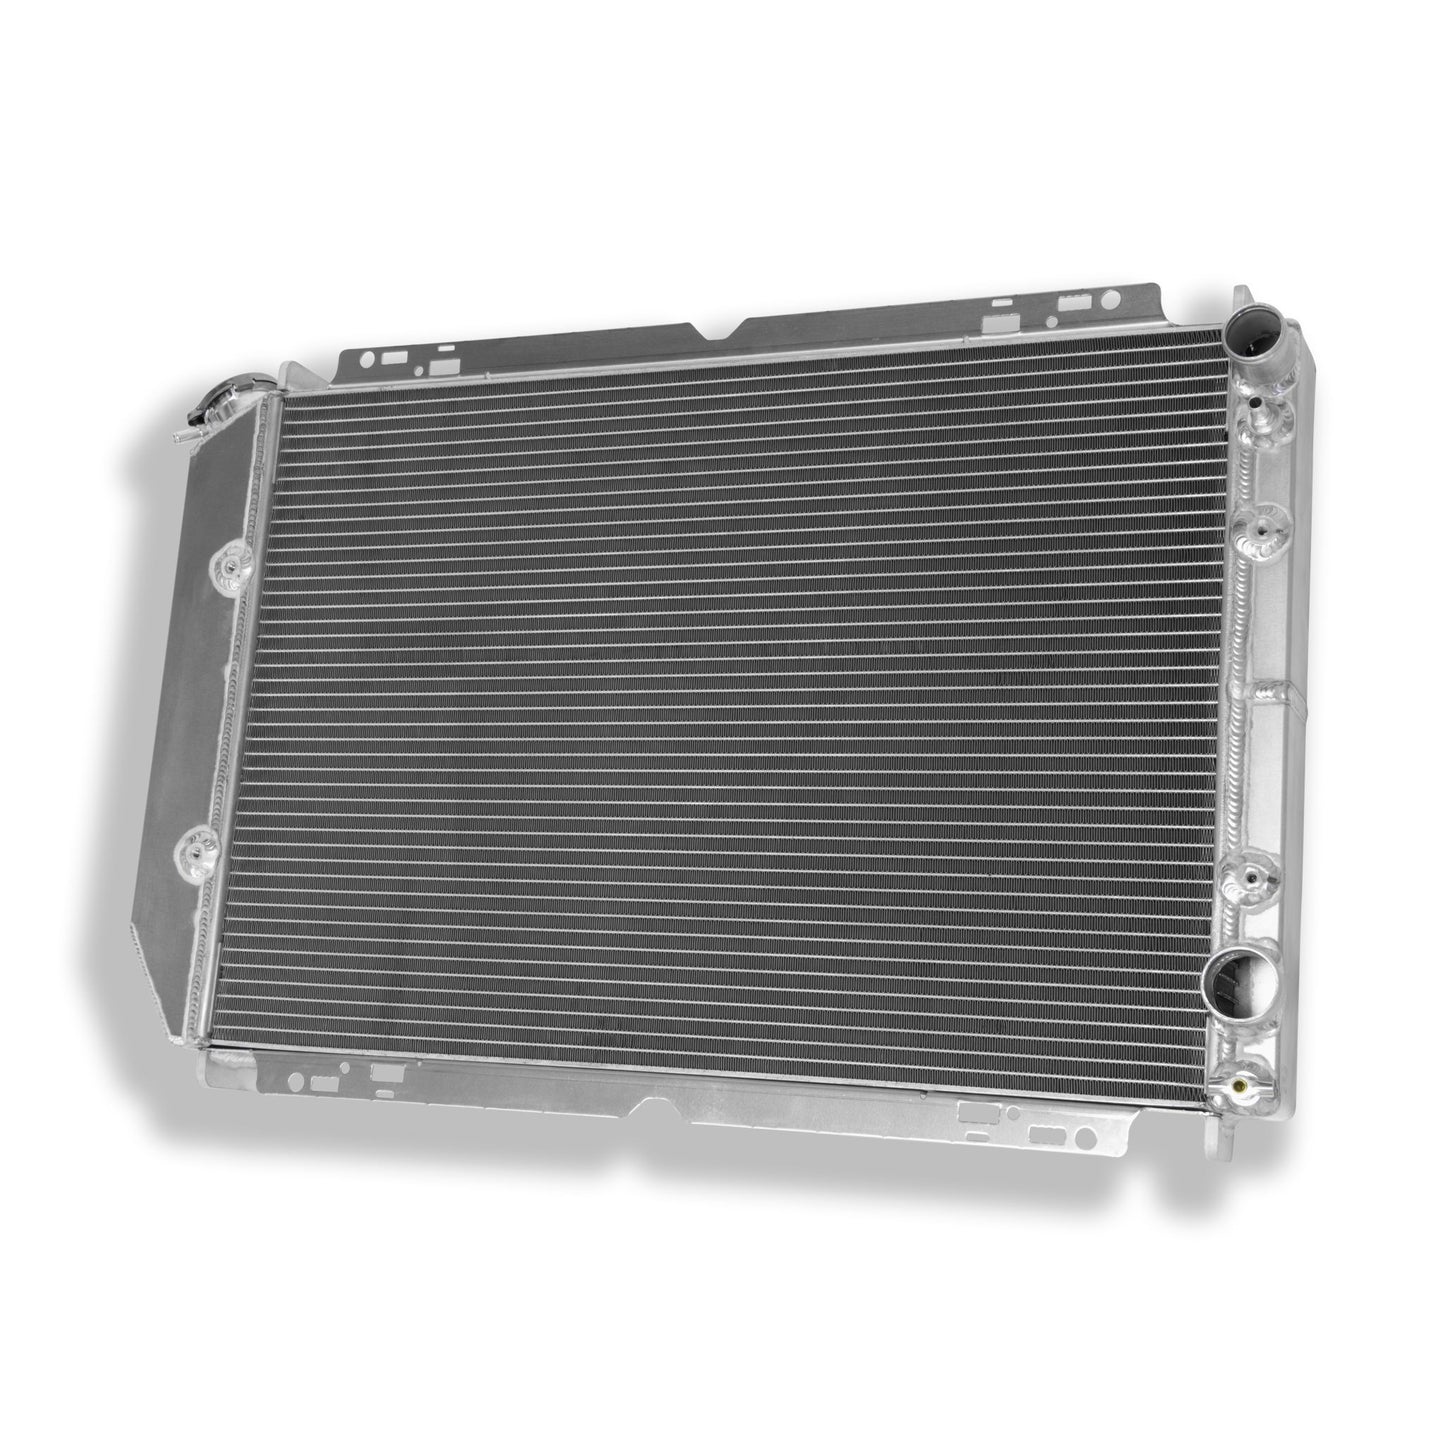 Flex-A-Lite - Extruded Core Radiator 315501